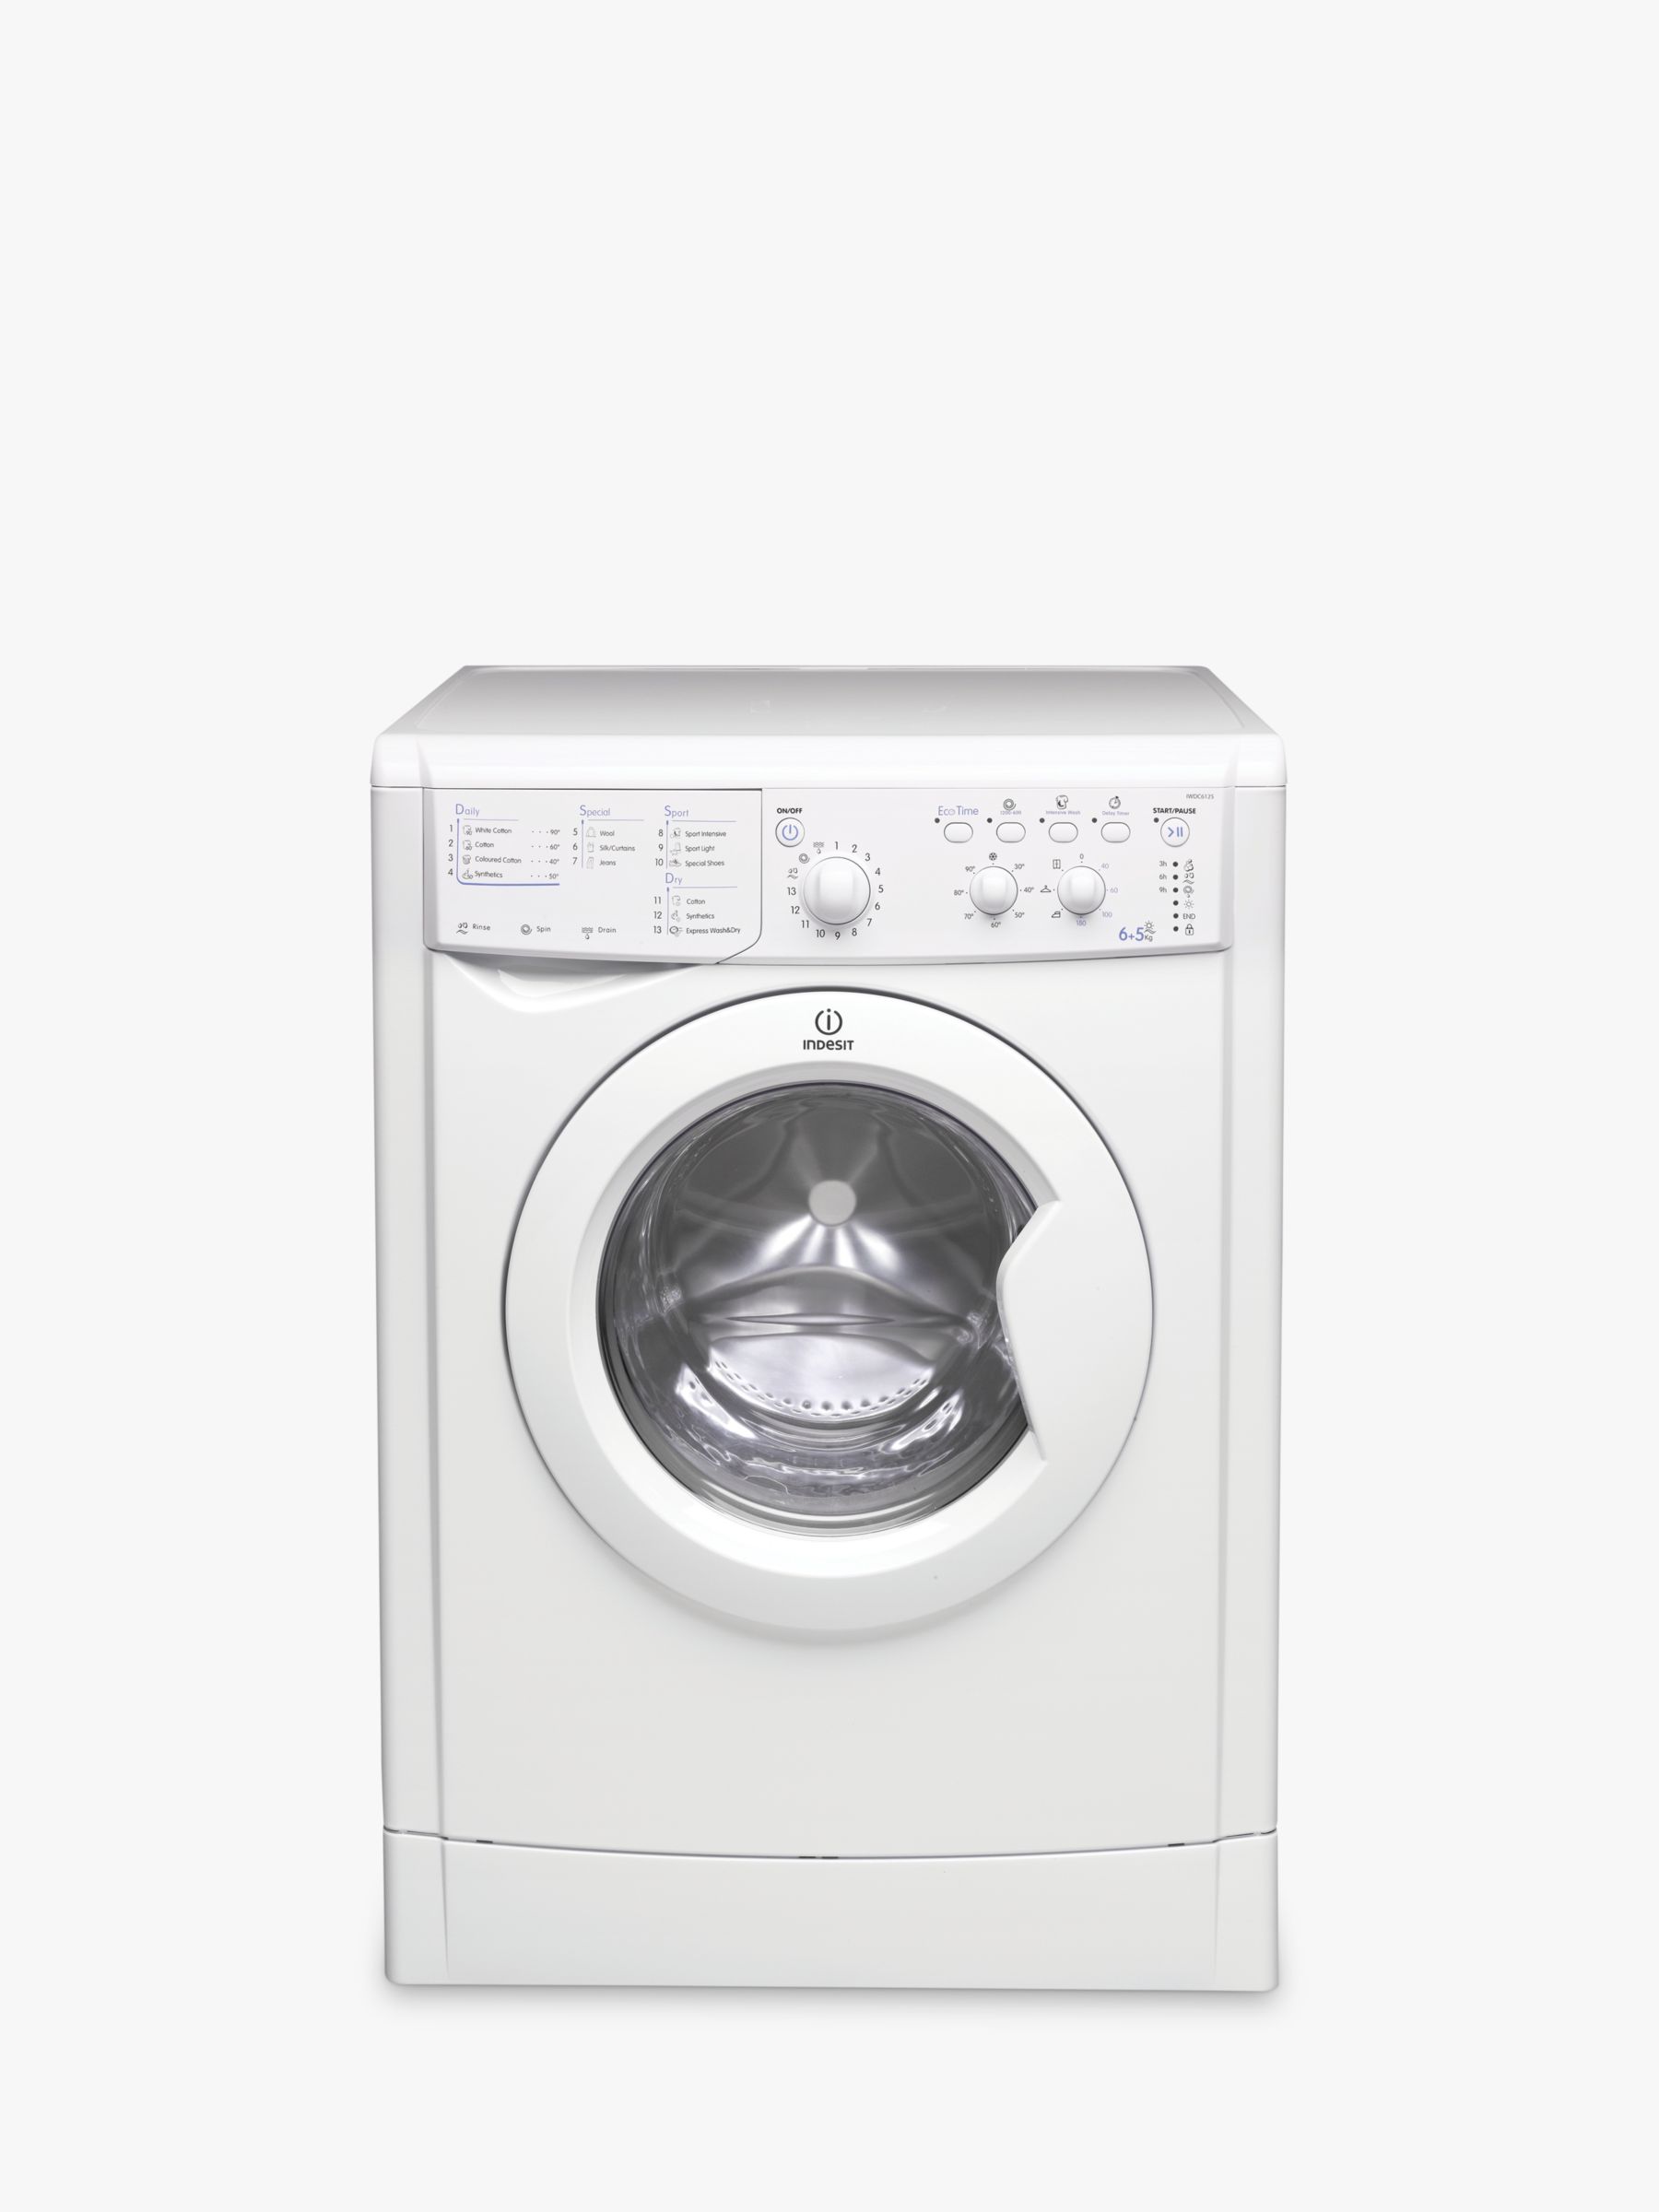 Underwear Underwear Washing Machine Washing and Drying Integrated High  Temperature Boiling and Washing Mini Washing